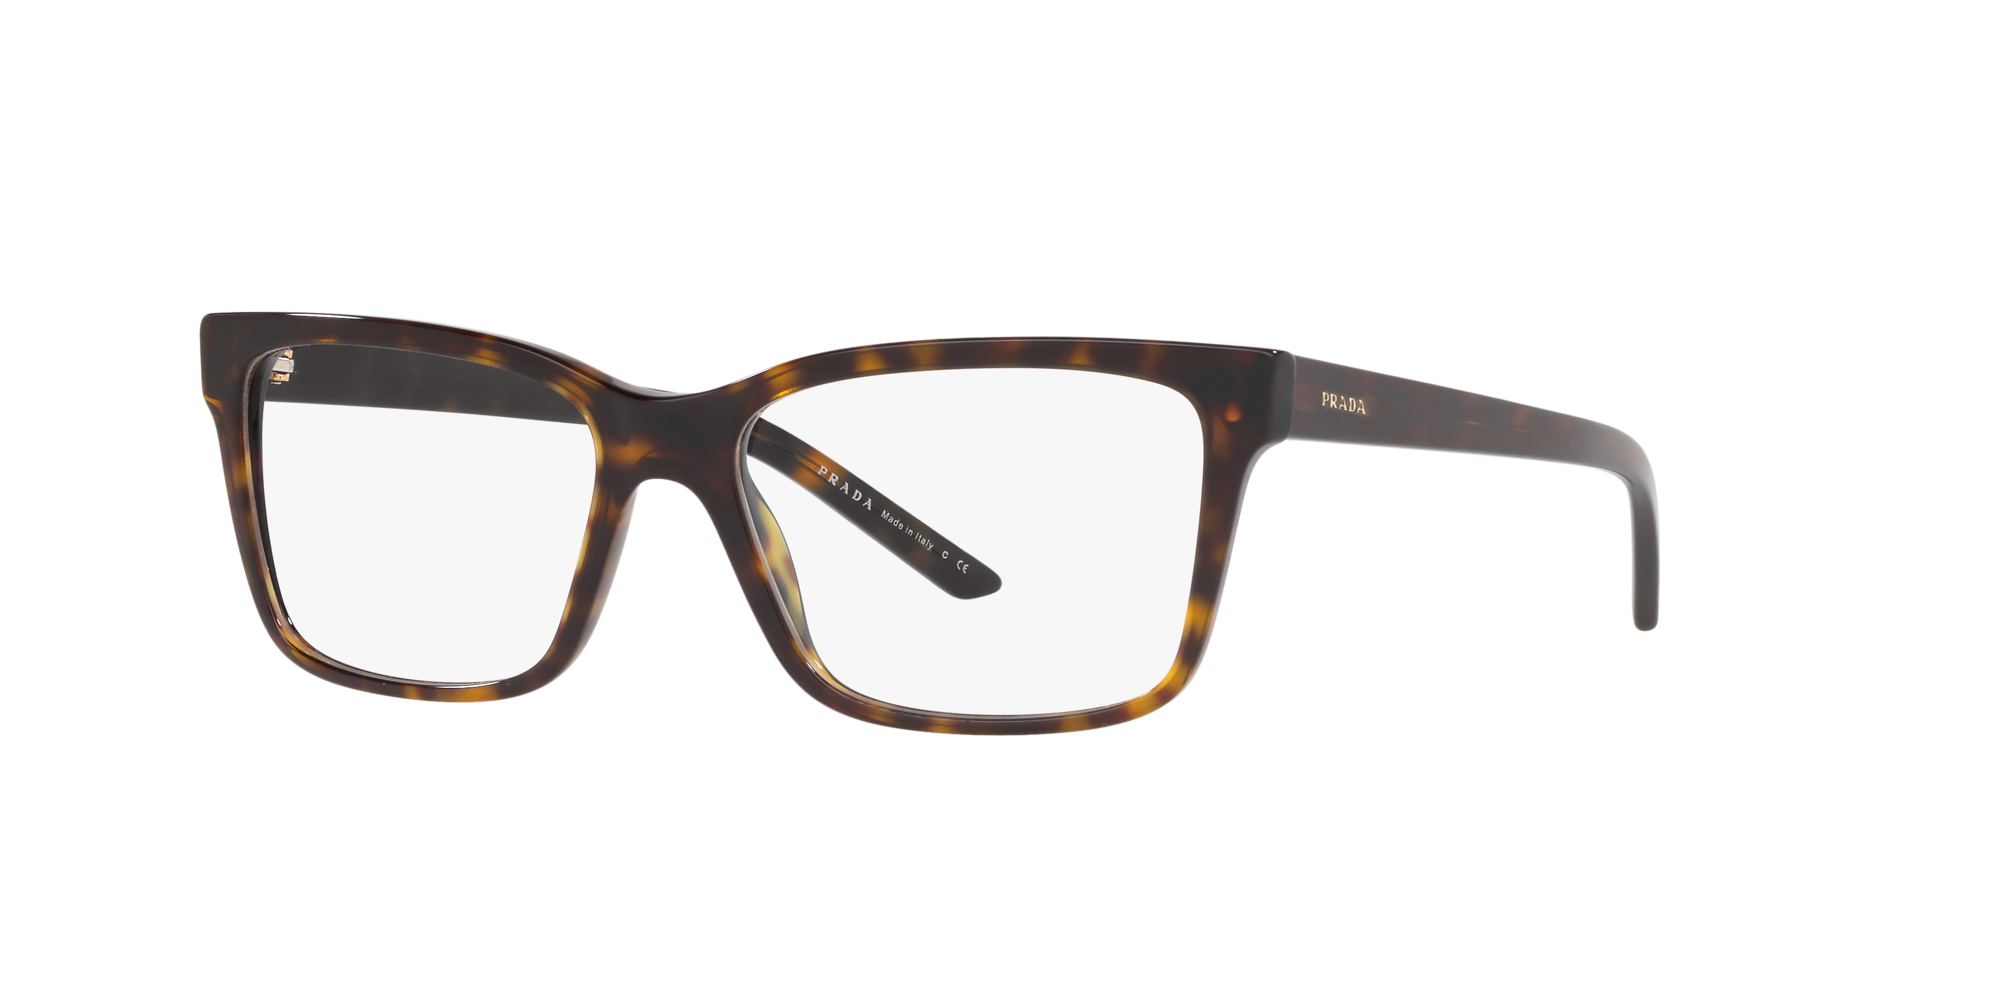 prada men's eyeglasses lenscrafters